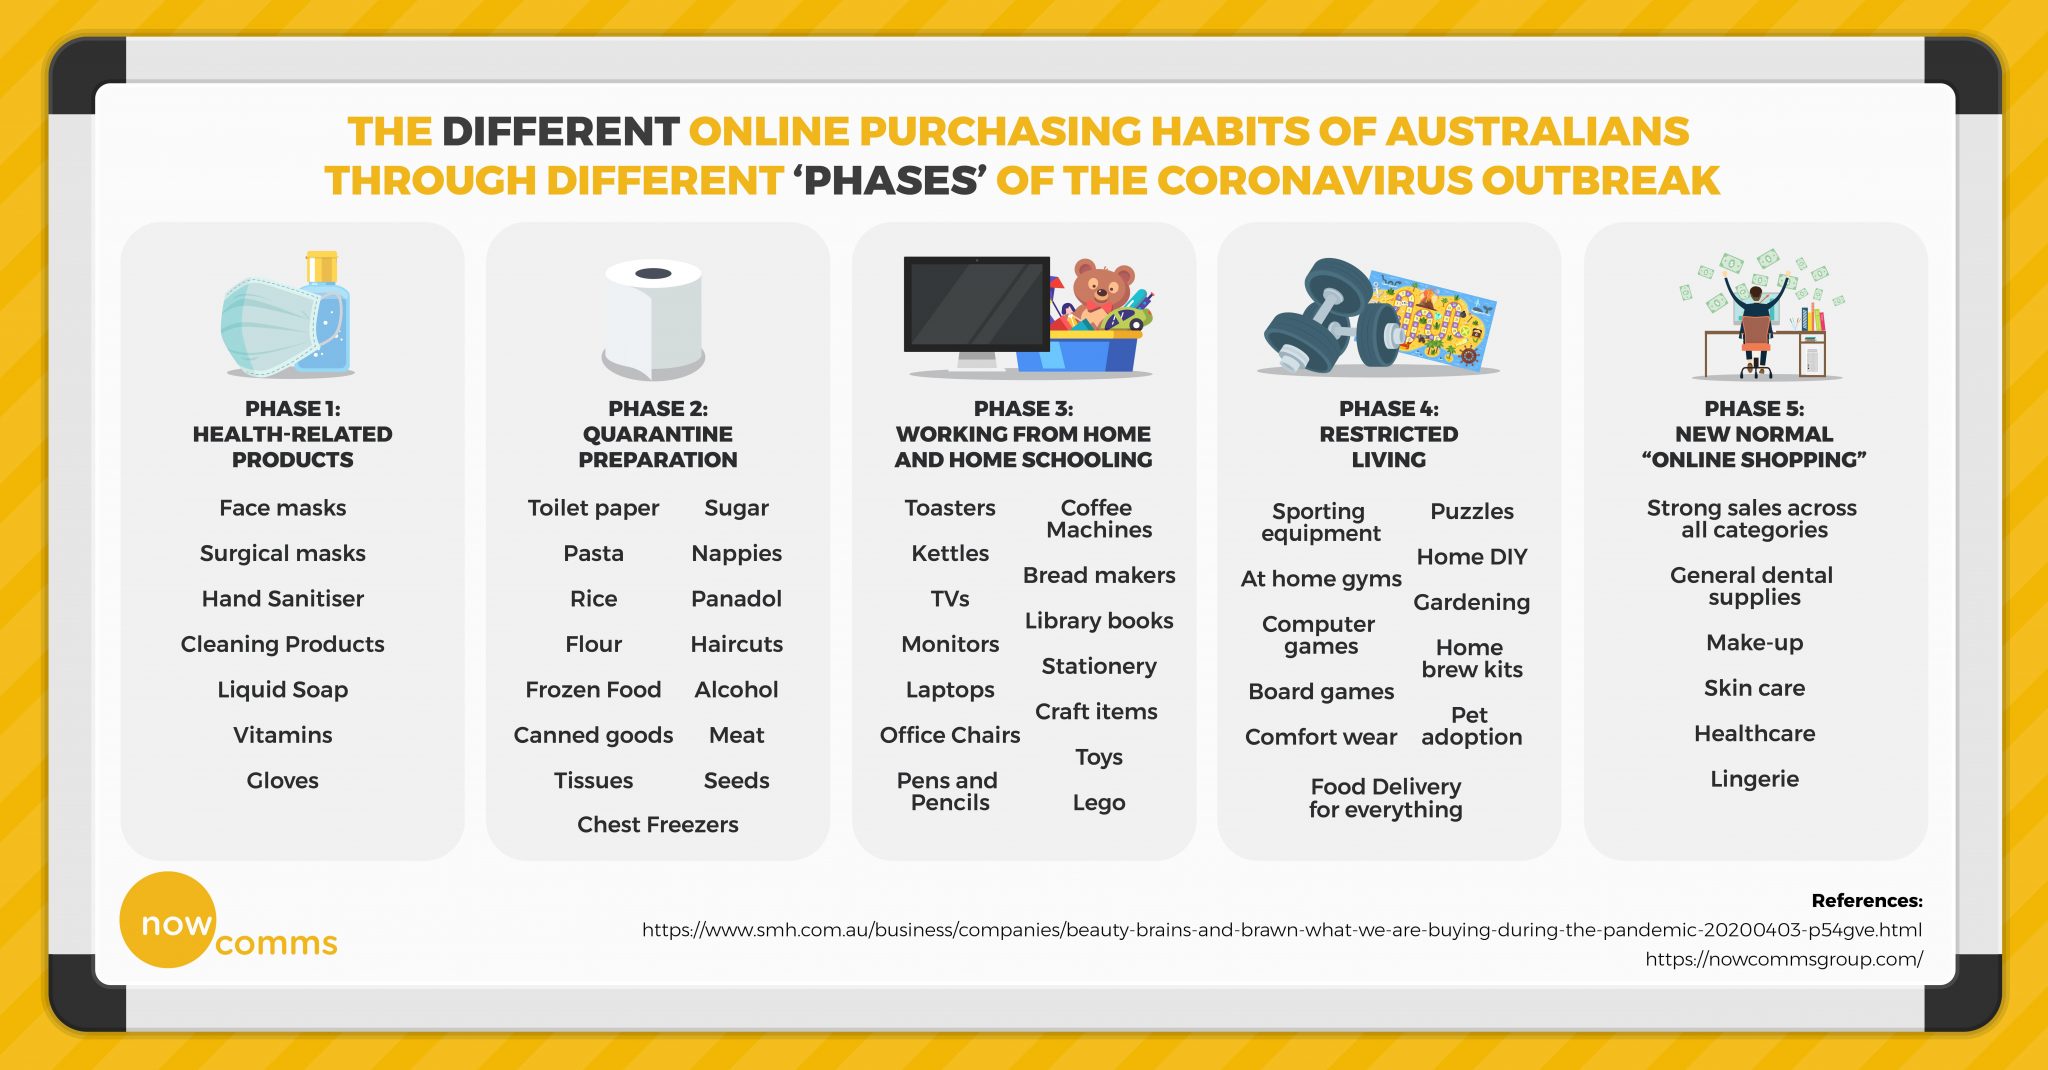 Online purchasing habits of Australians during coronavirus infographic